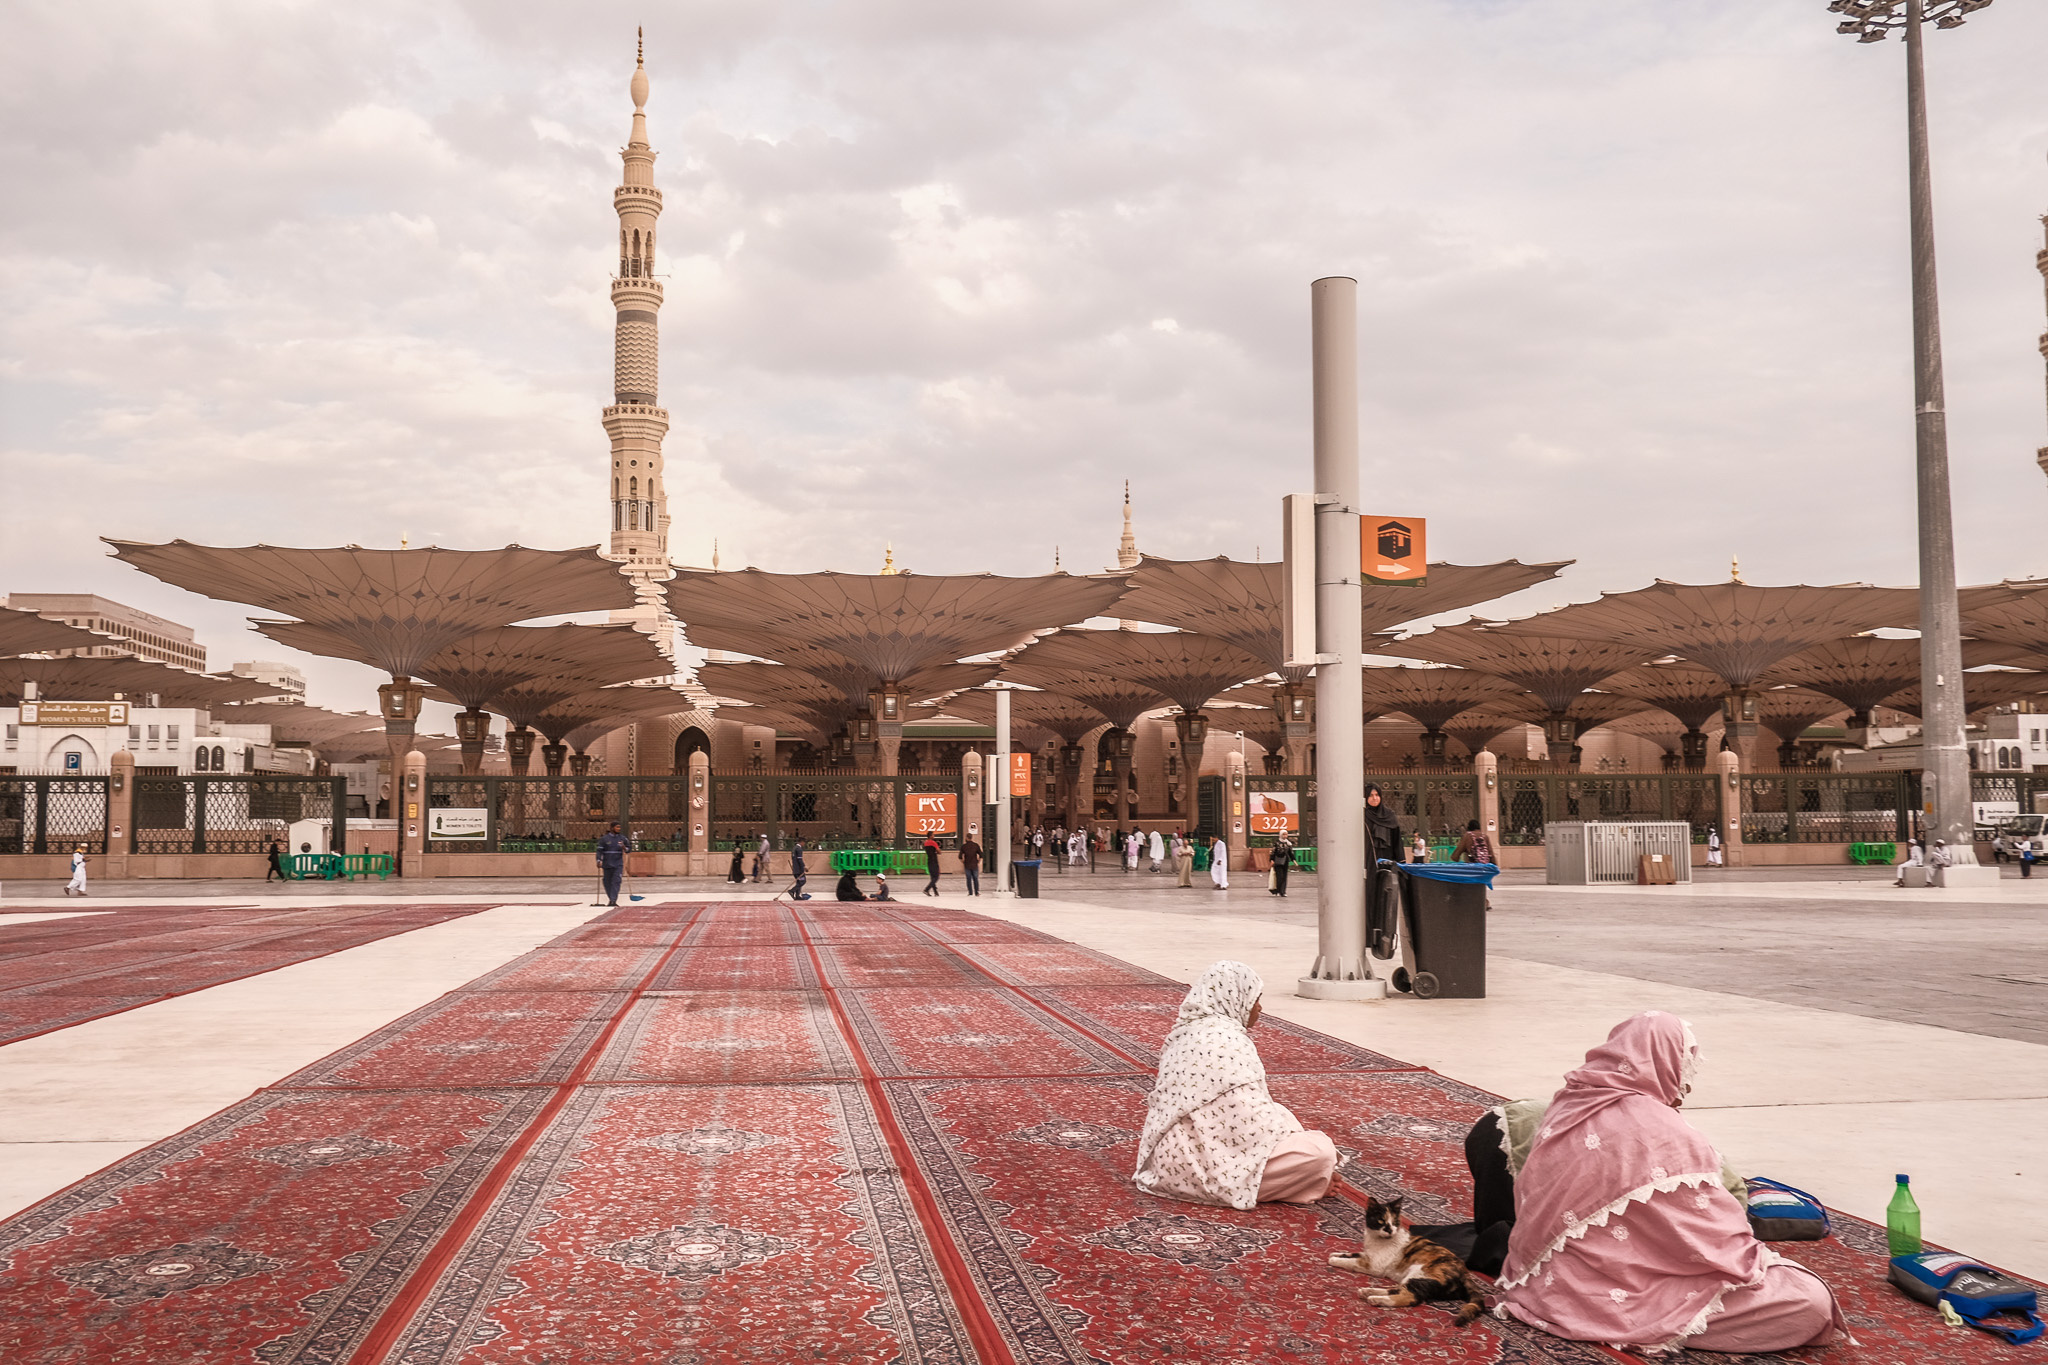 Территория вокруг мечети тоже предназначена для молитв